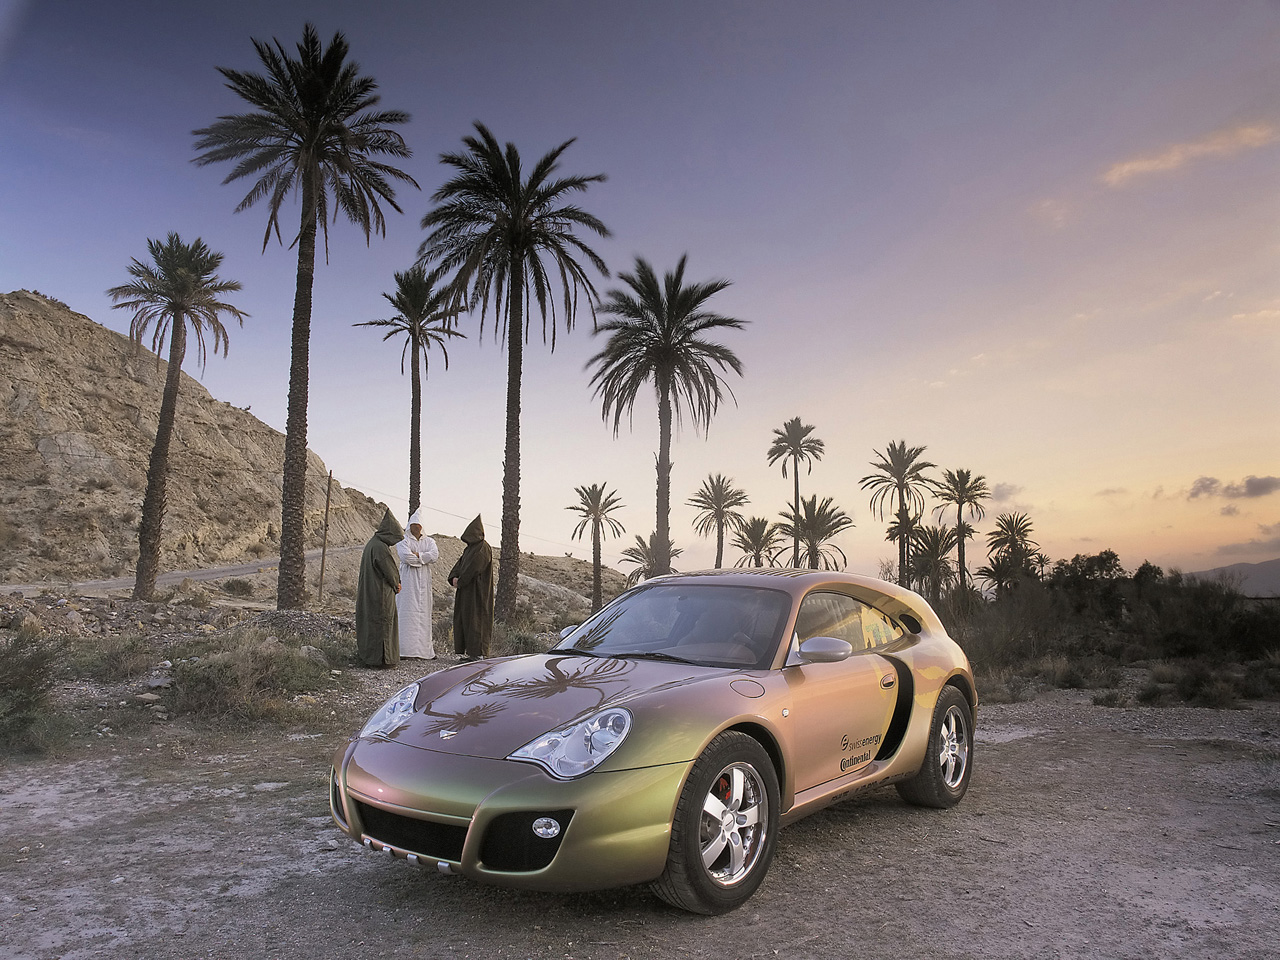 2003 Rinspeed Bedouin based on Porsche 996